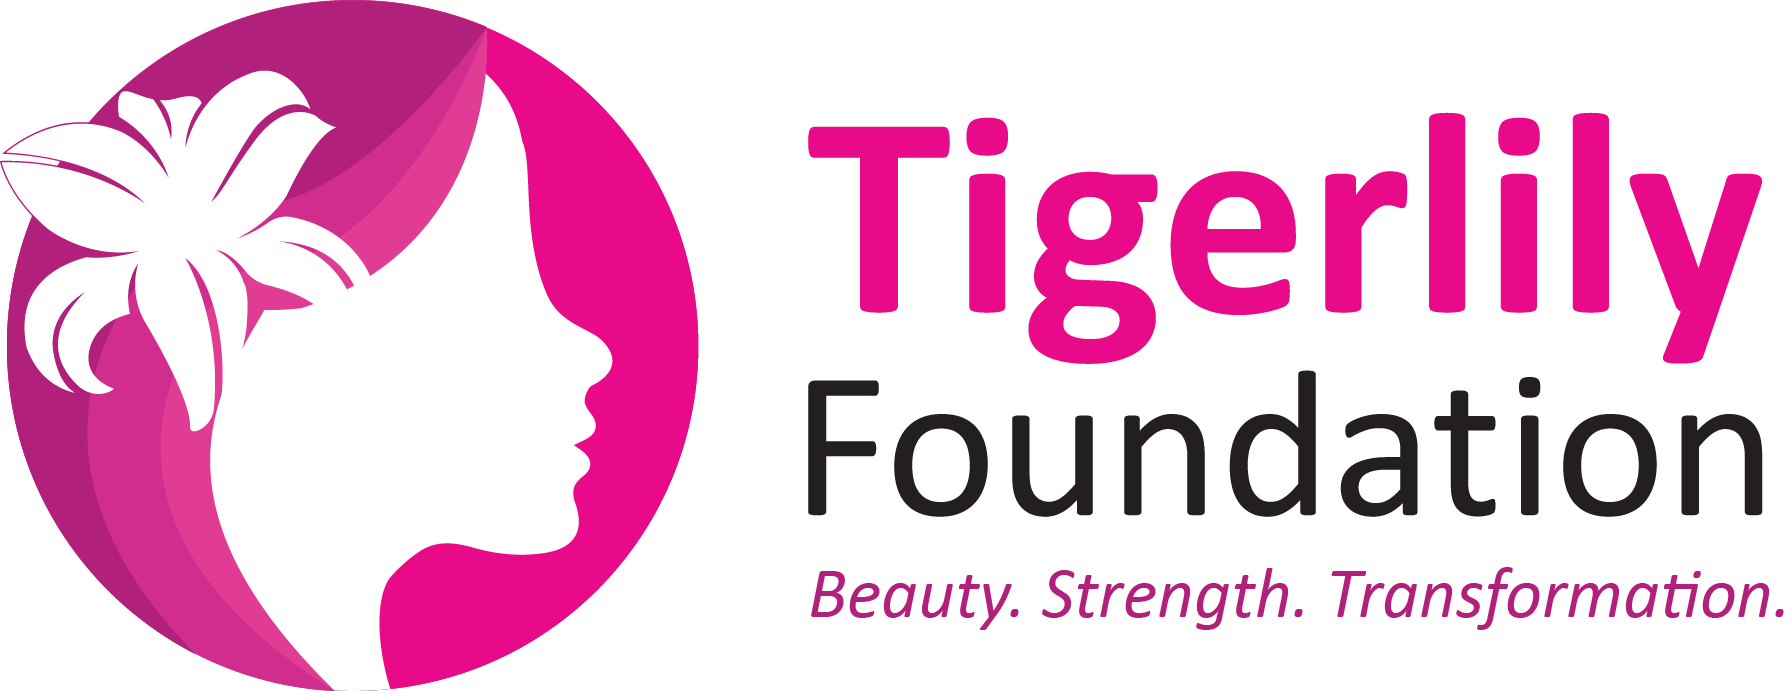 Tigerlily Foundation